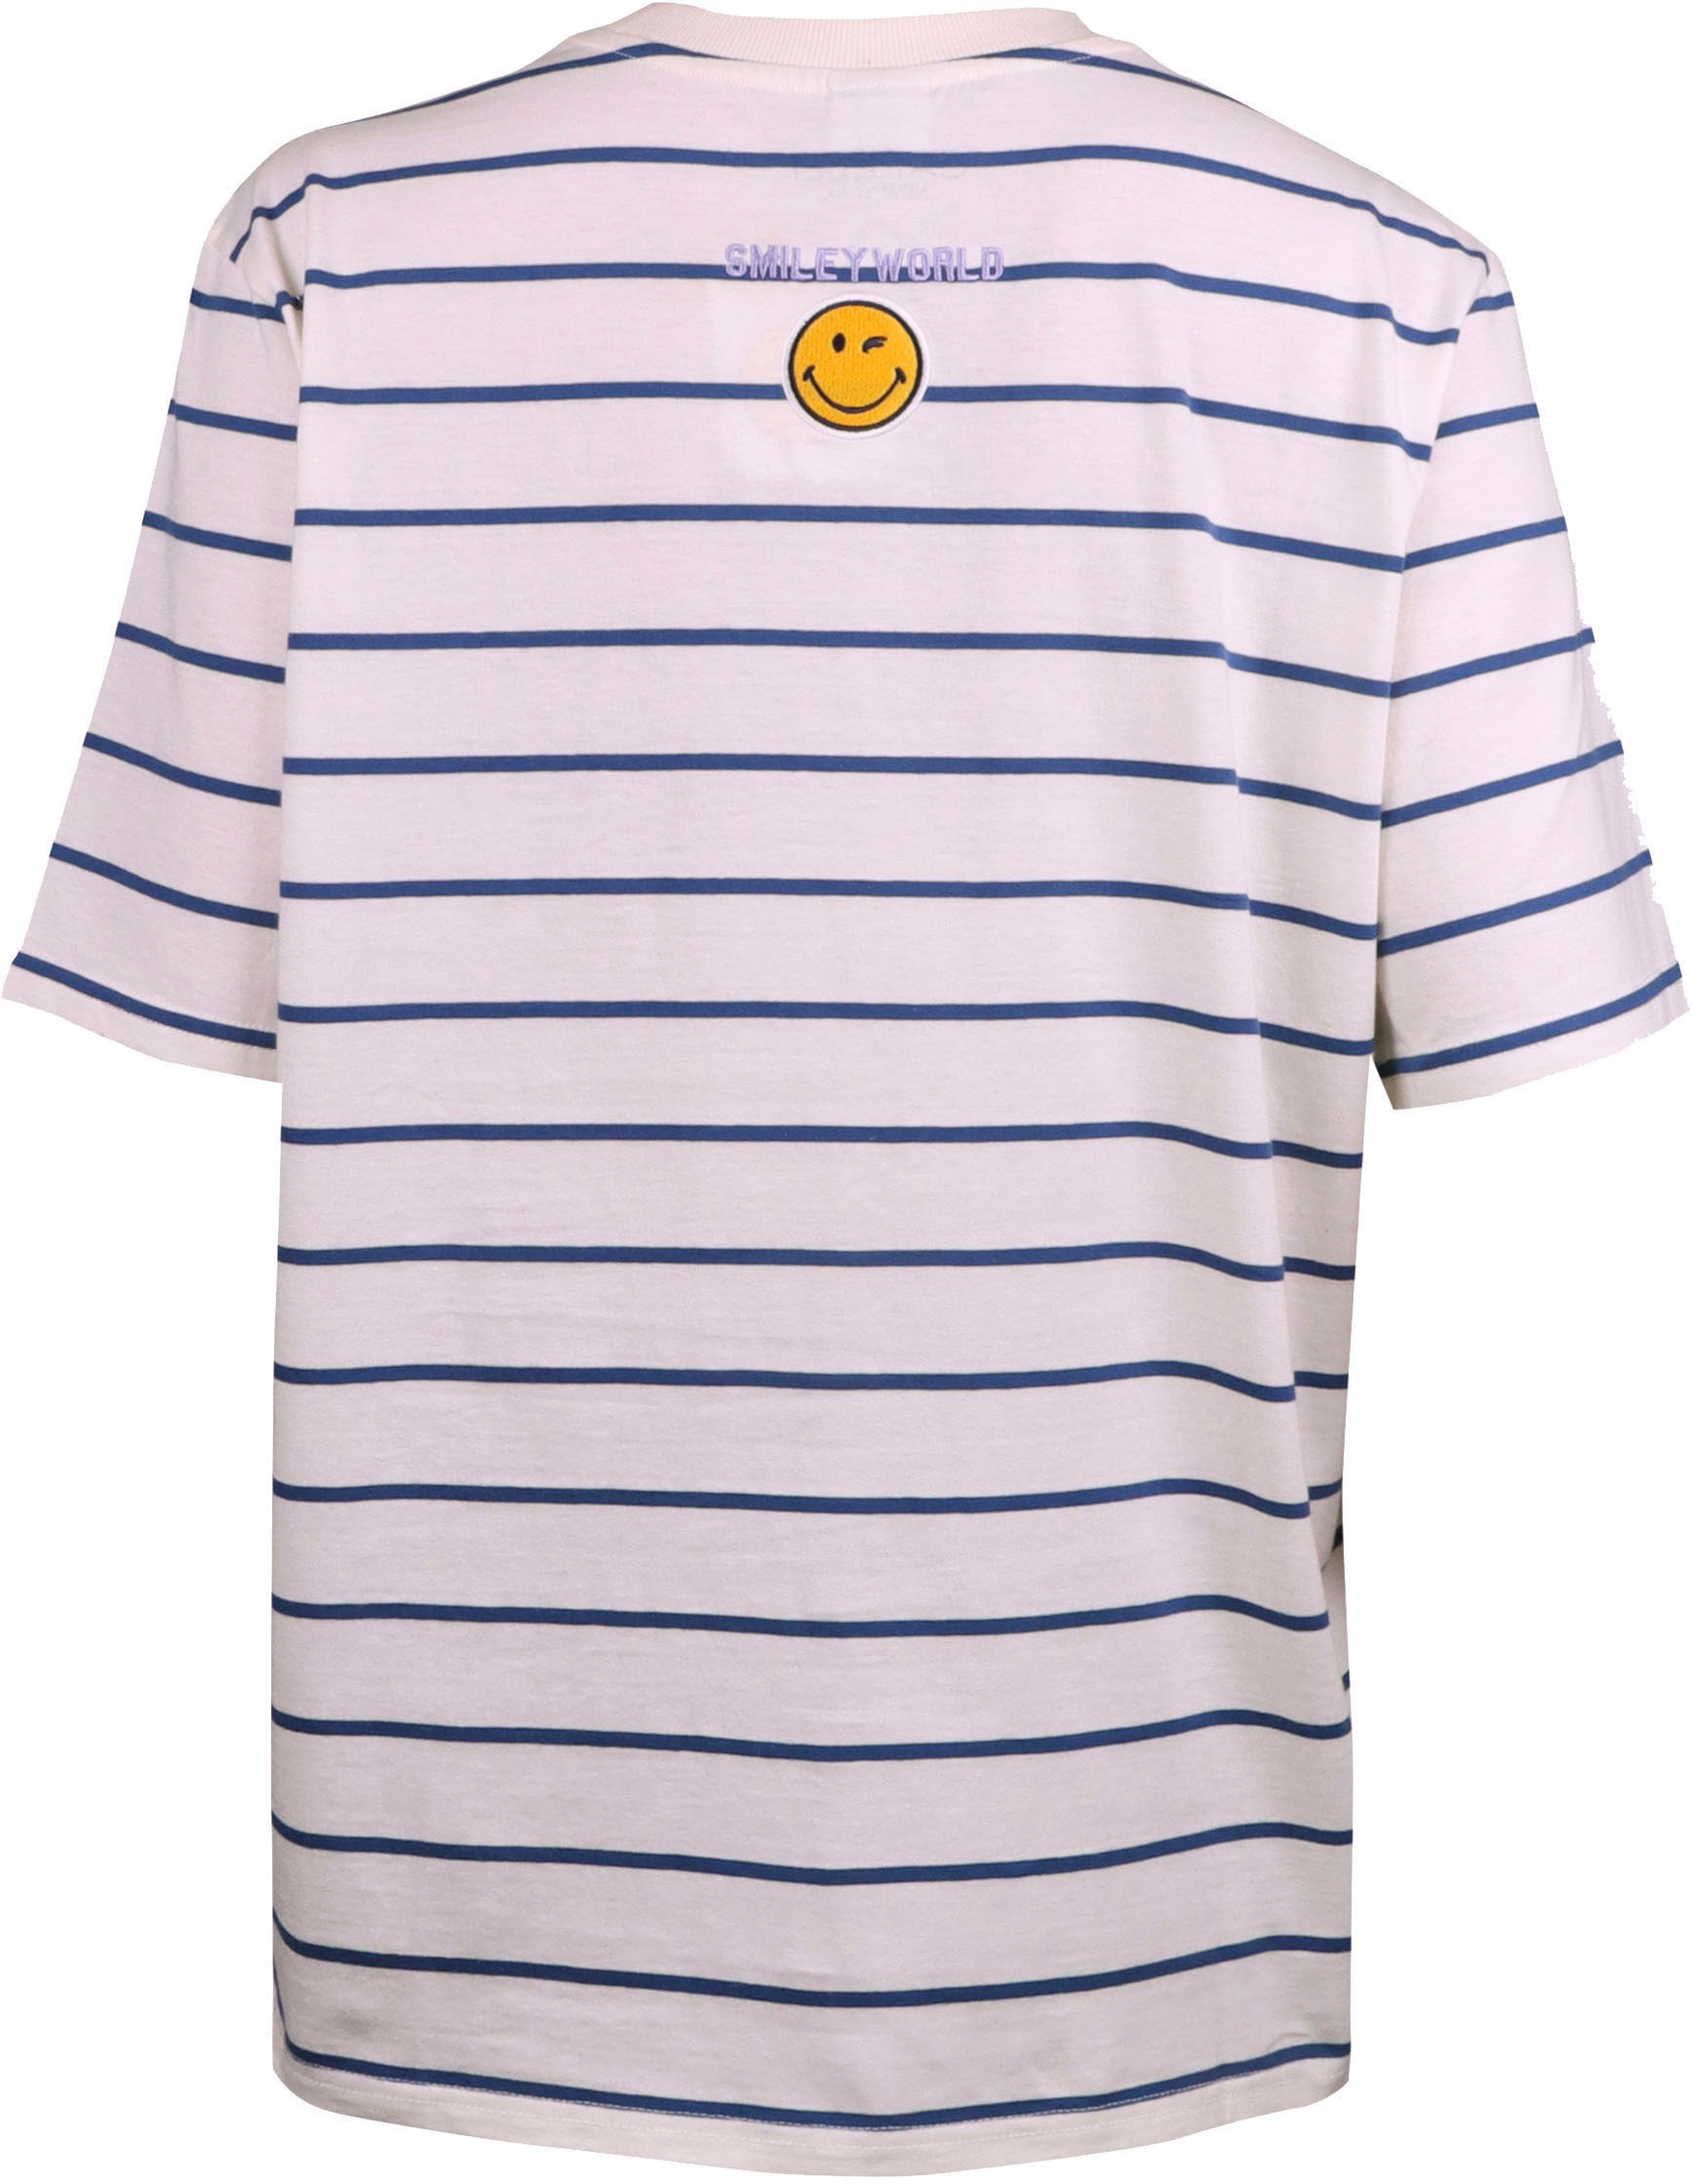 Capelli New York T-Shirt, gestreift mit Smiley Aplikation